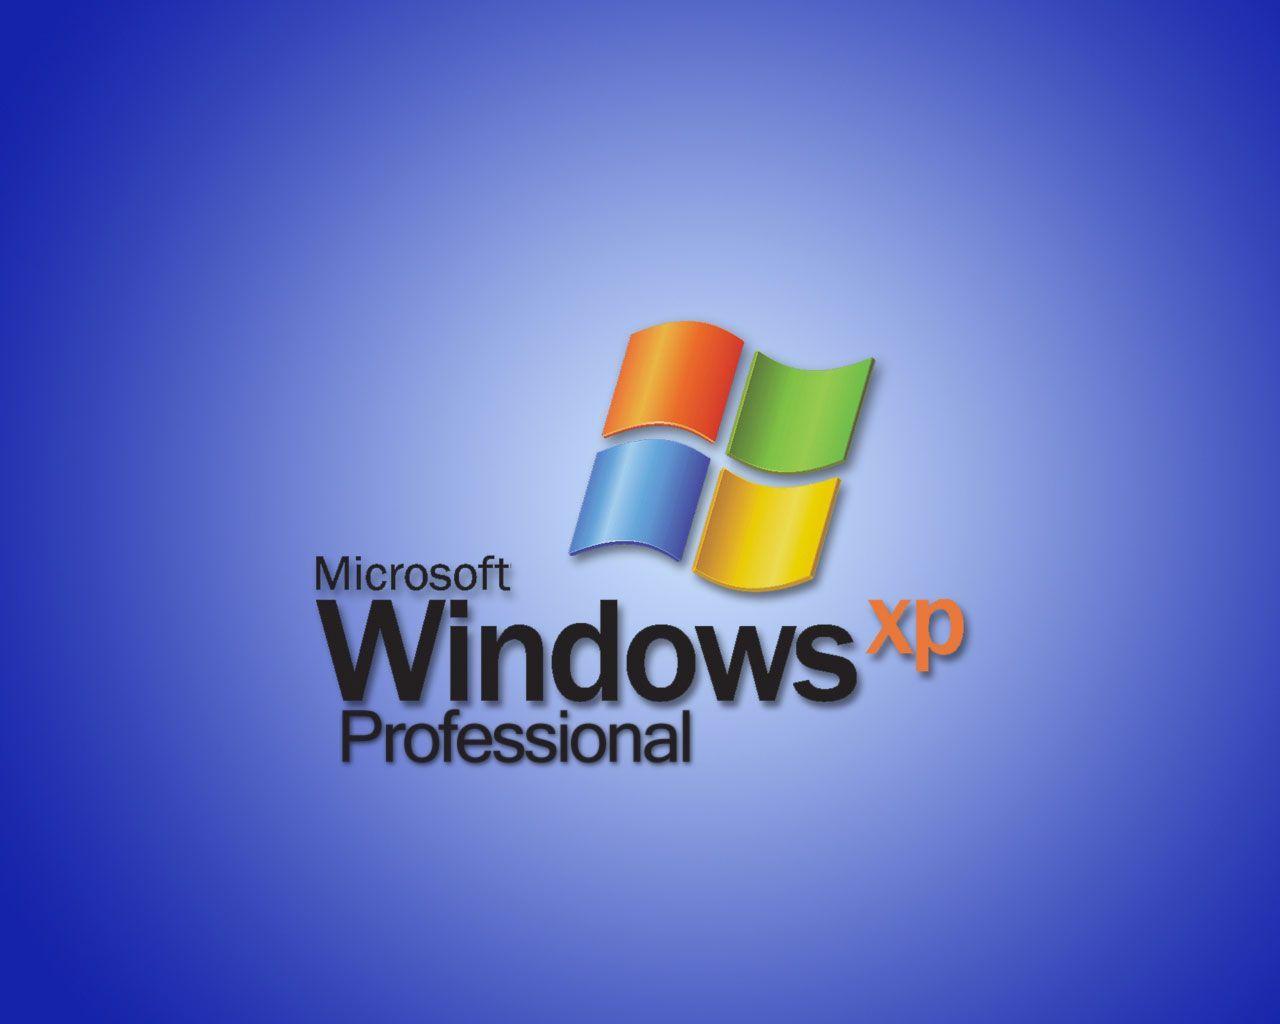 Microsoft Windows XP Professional Wallpaper. Best Free Wallpaper